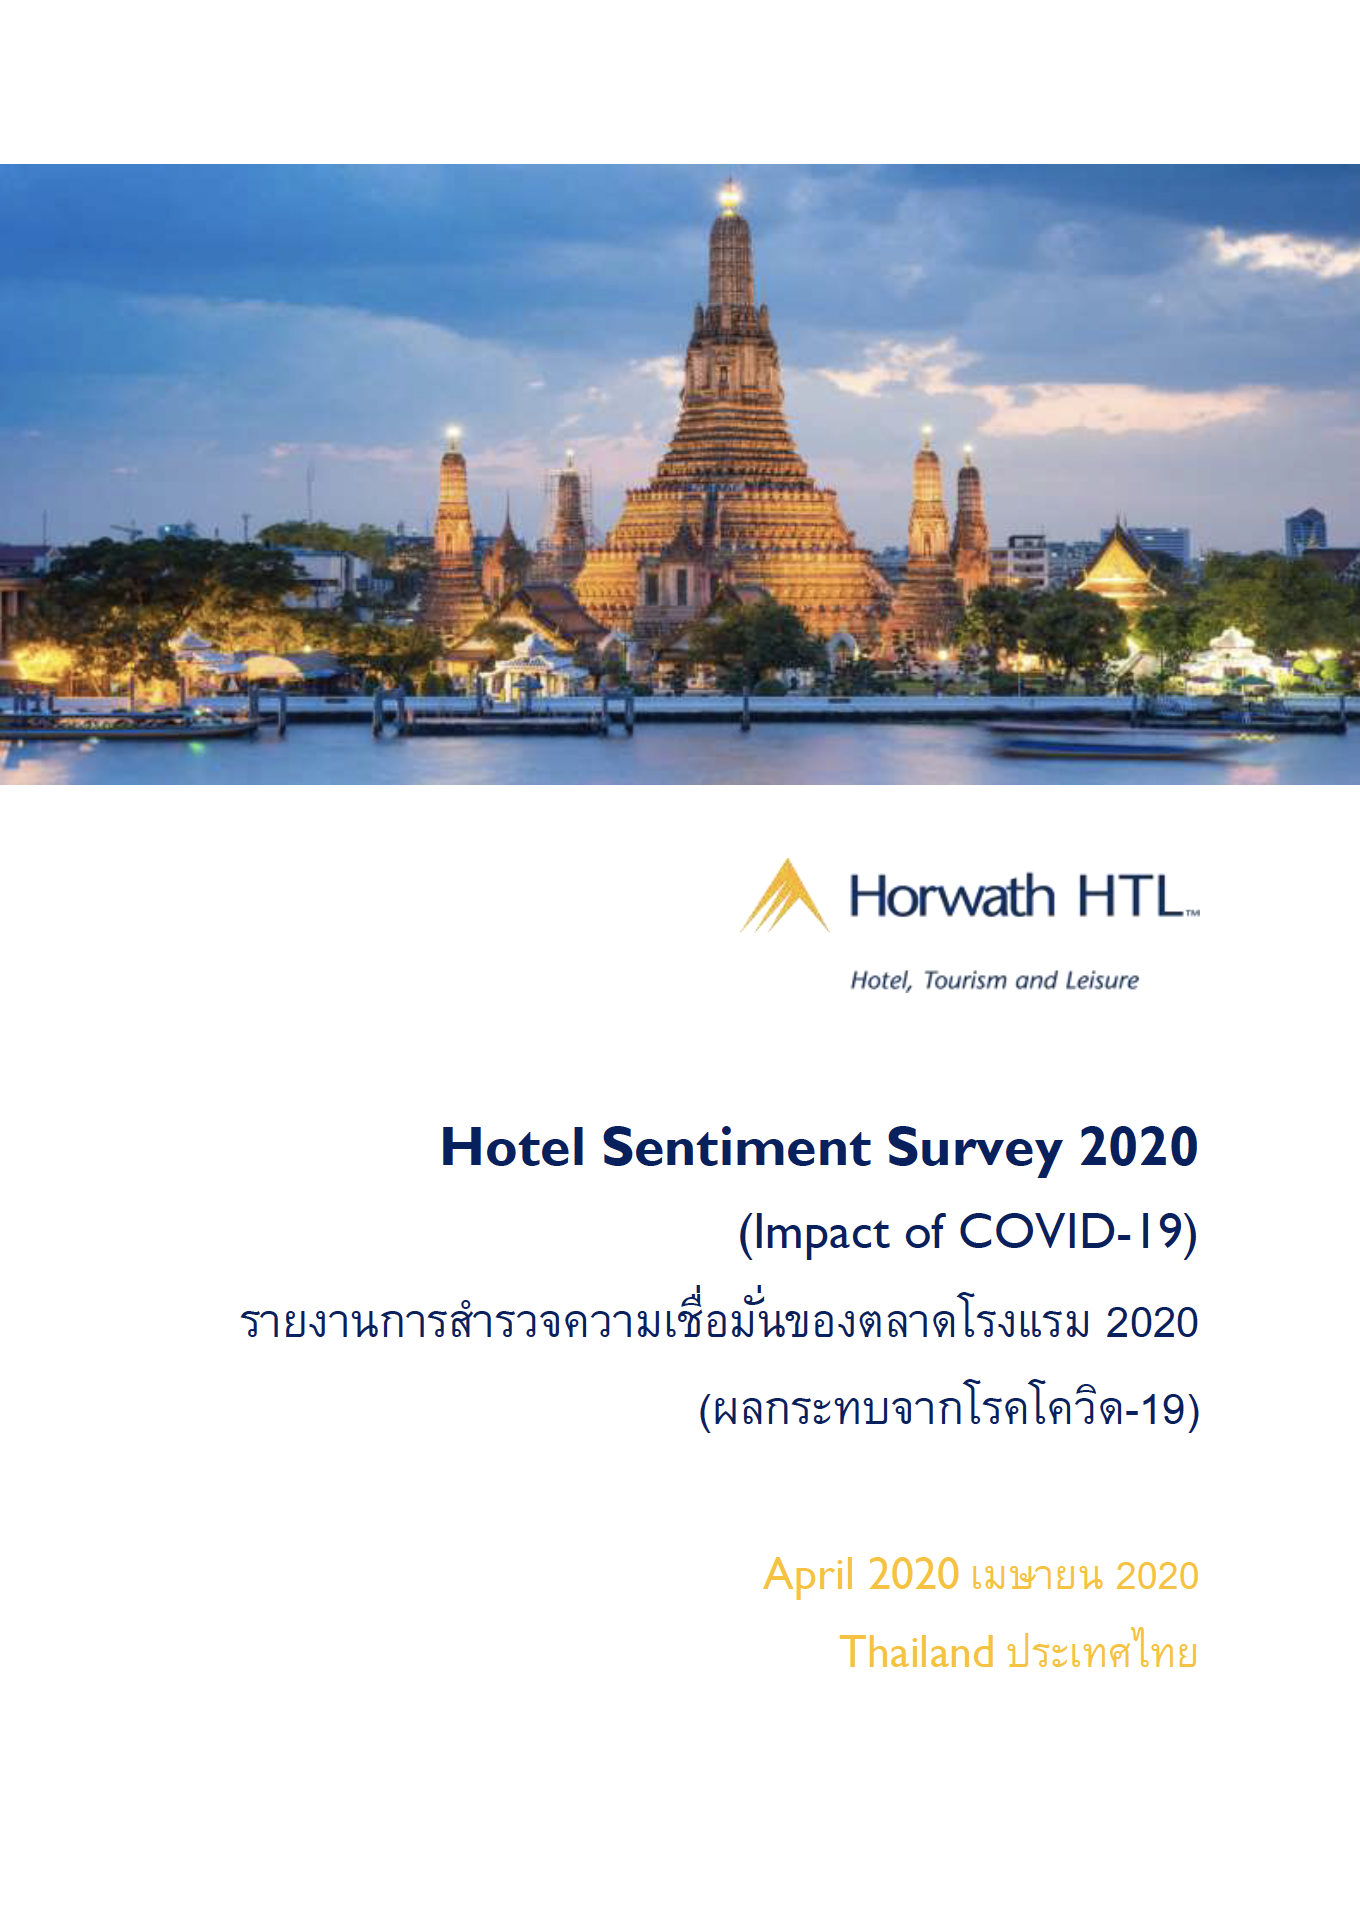 Update Greece and New Zealand: COVID-19 Global Hotel Market Sentiment Surveys